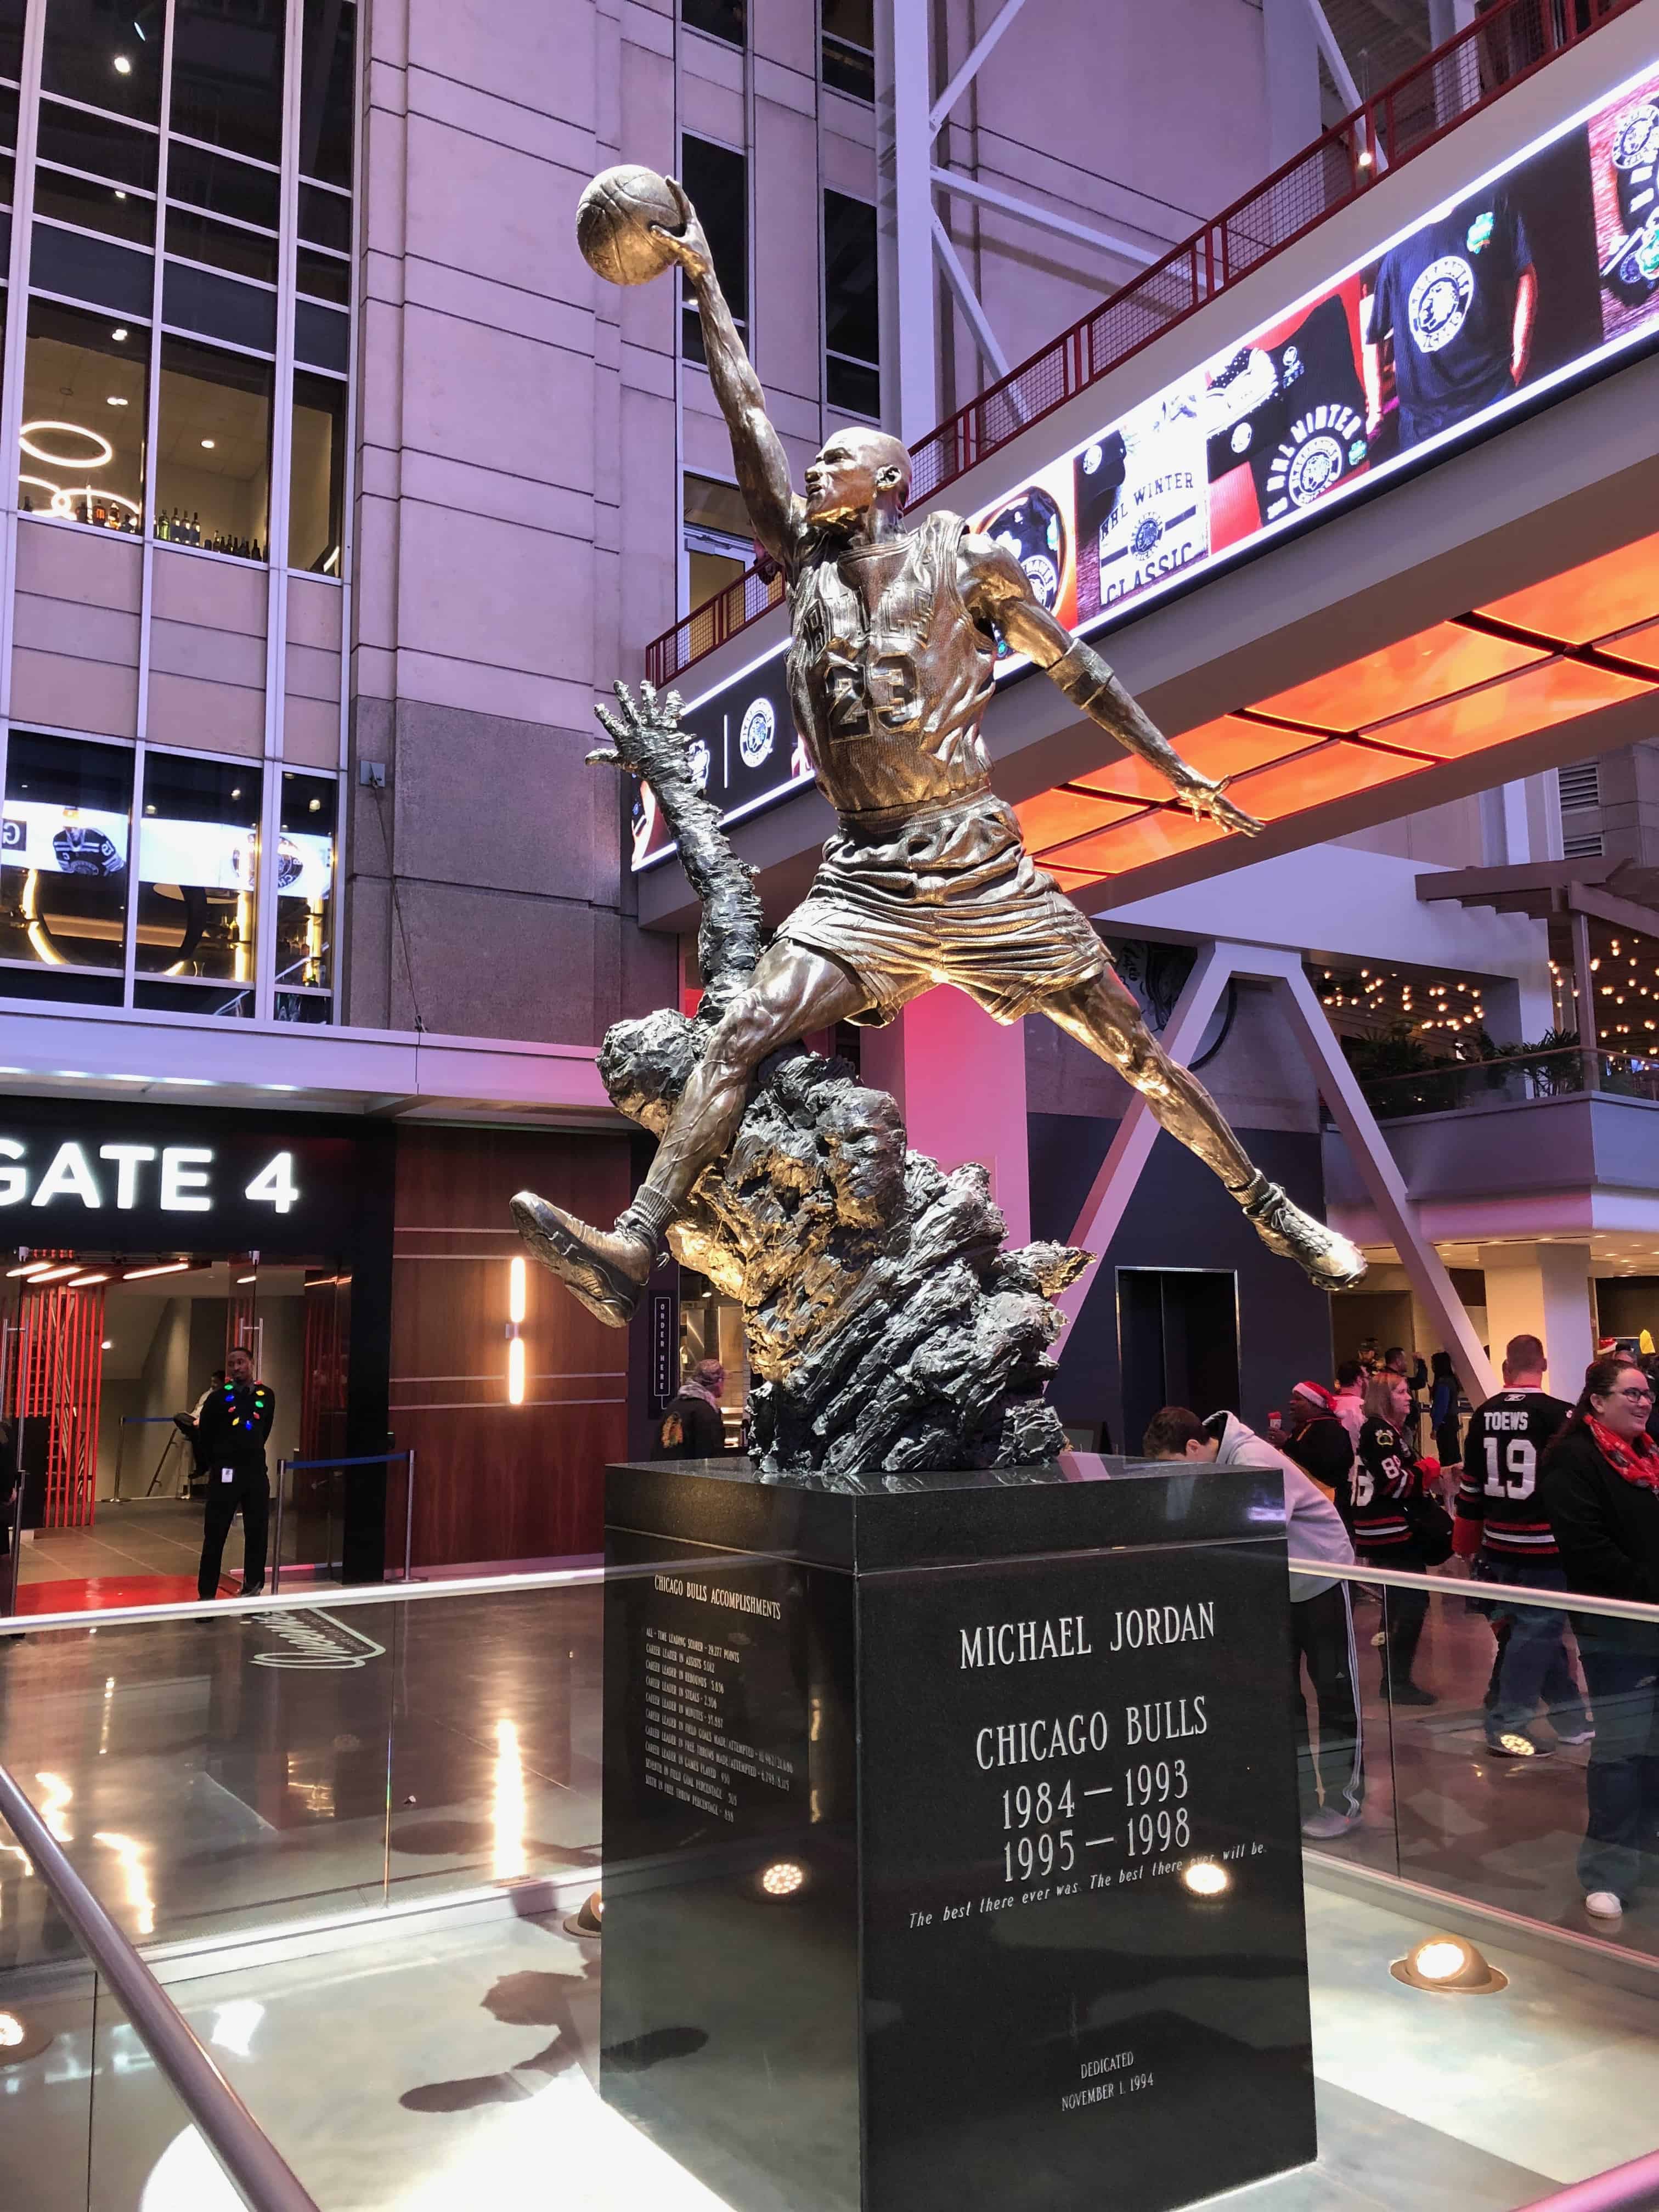 Michael Jordan statue at the United Center in Chicago, Illinois